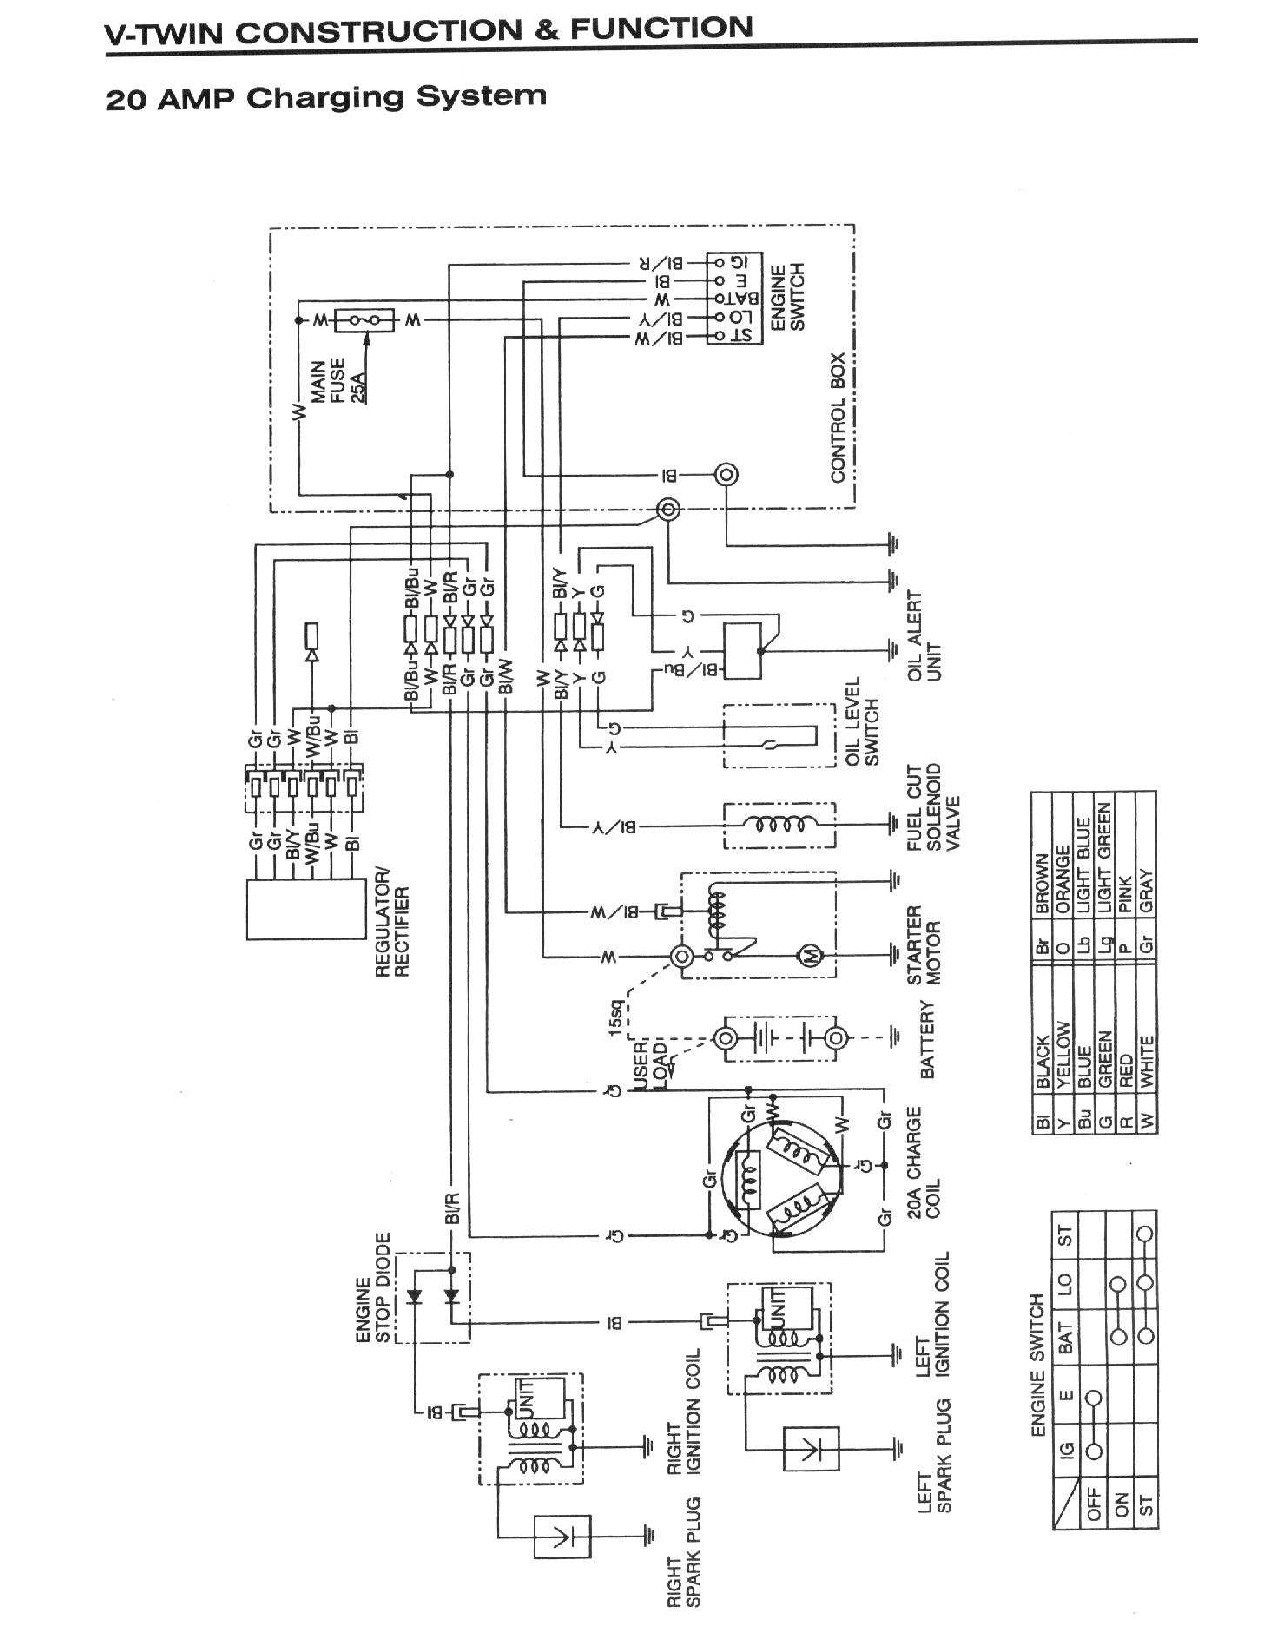 Honda Gx620 Electric Wiring | Wiring Diagram - Honda Gx390 Wiring Diagram